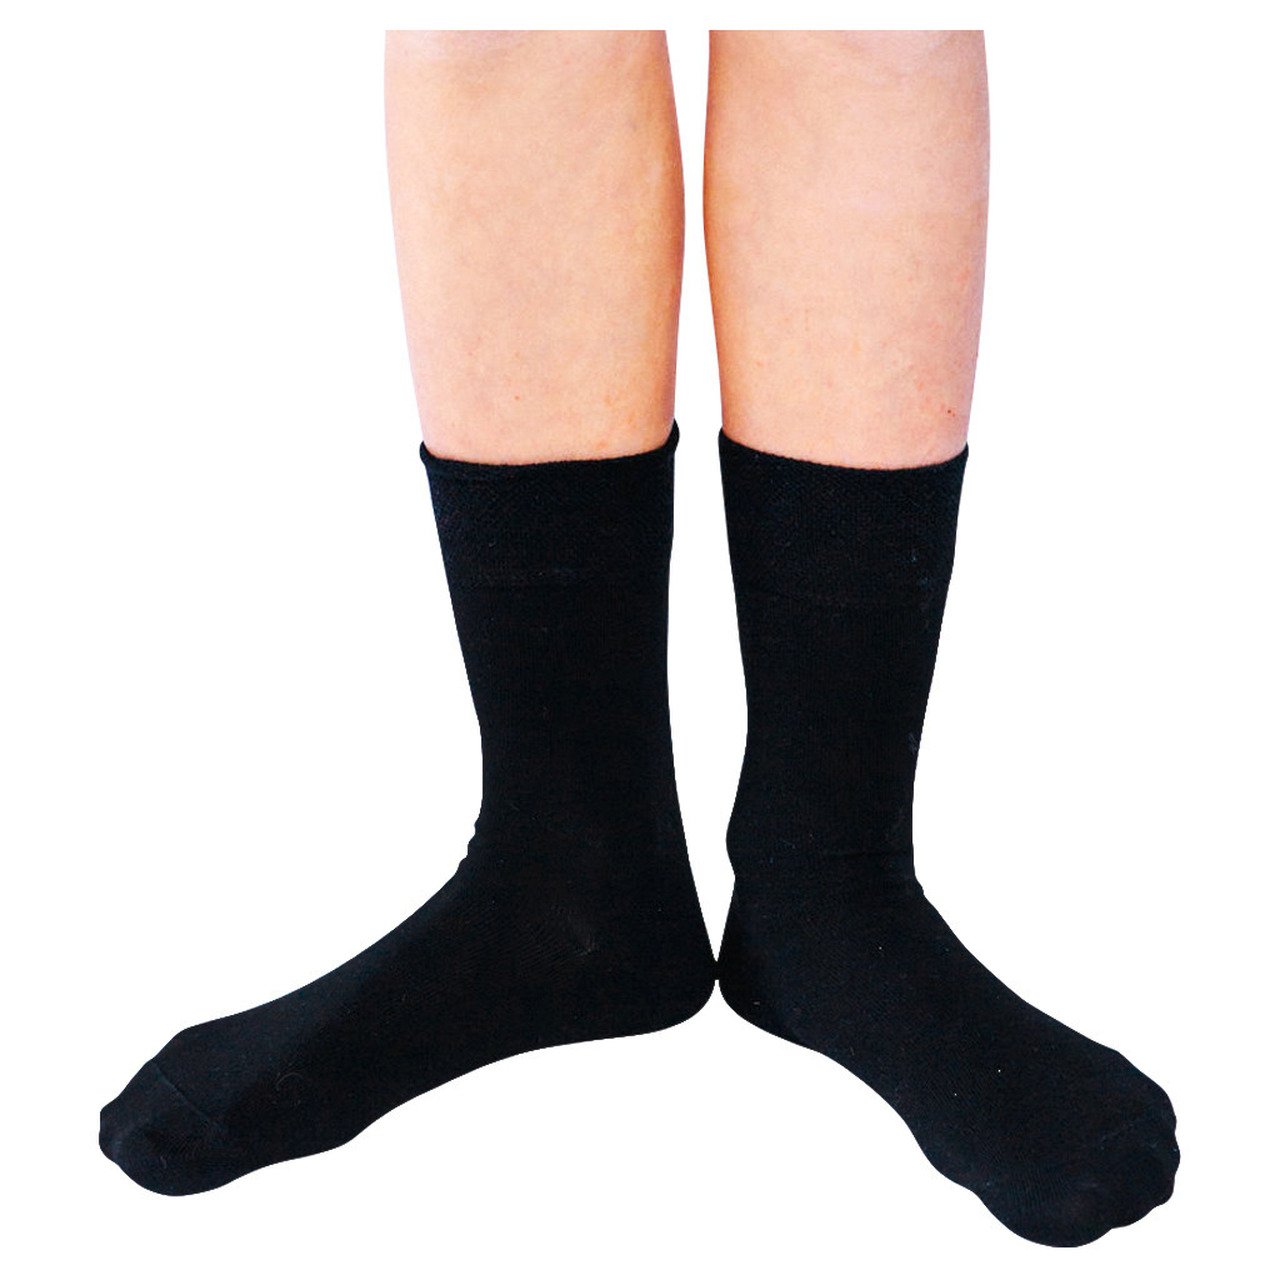 TENCEL Socks for Eczema on Feet